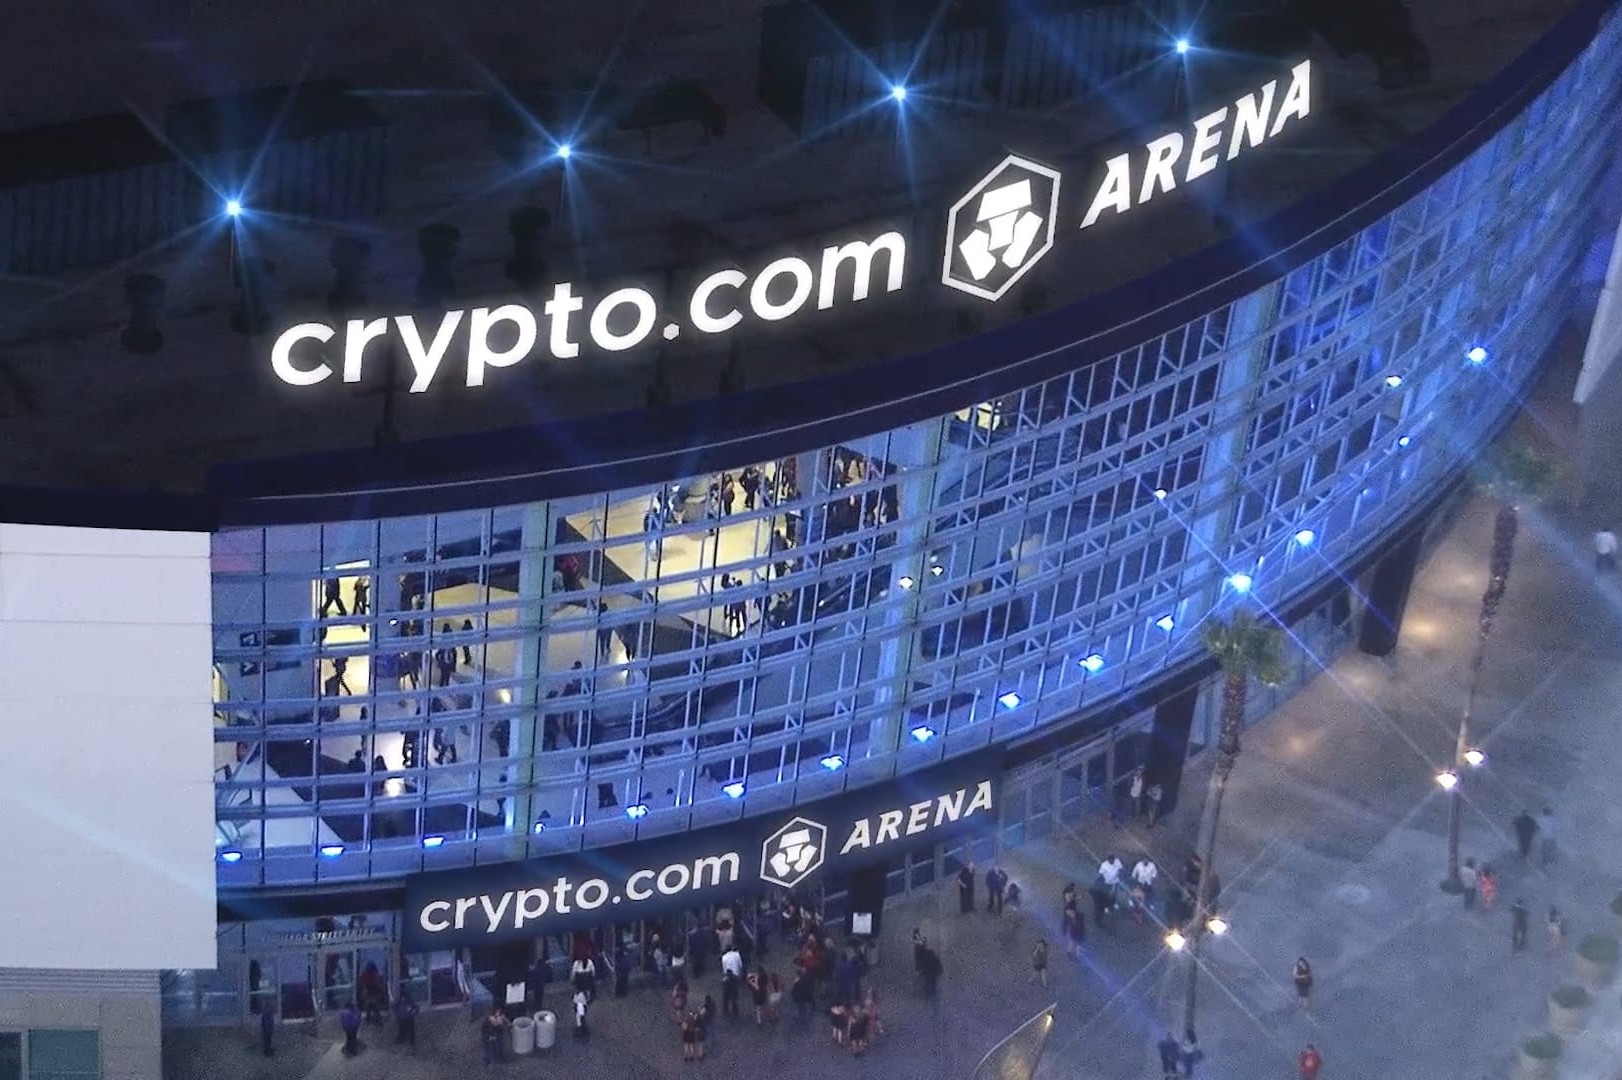 2023 LA Kings Sports & Entertainment Career Fair, Crypto.com Arena